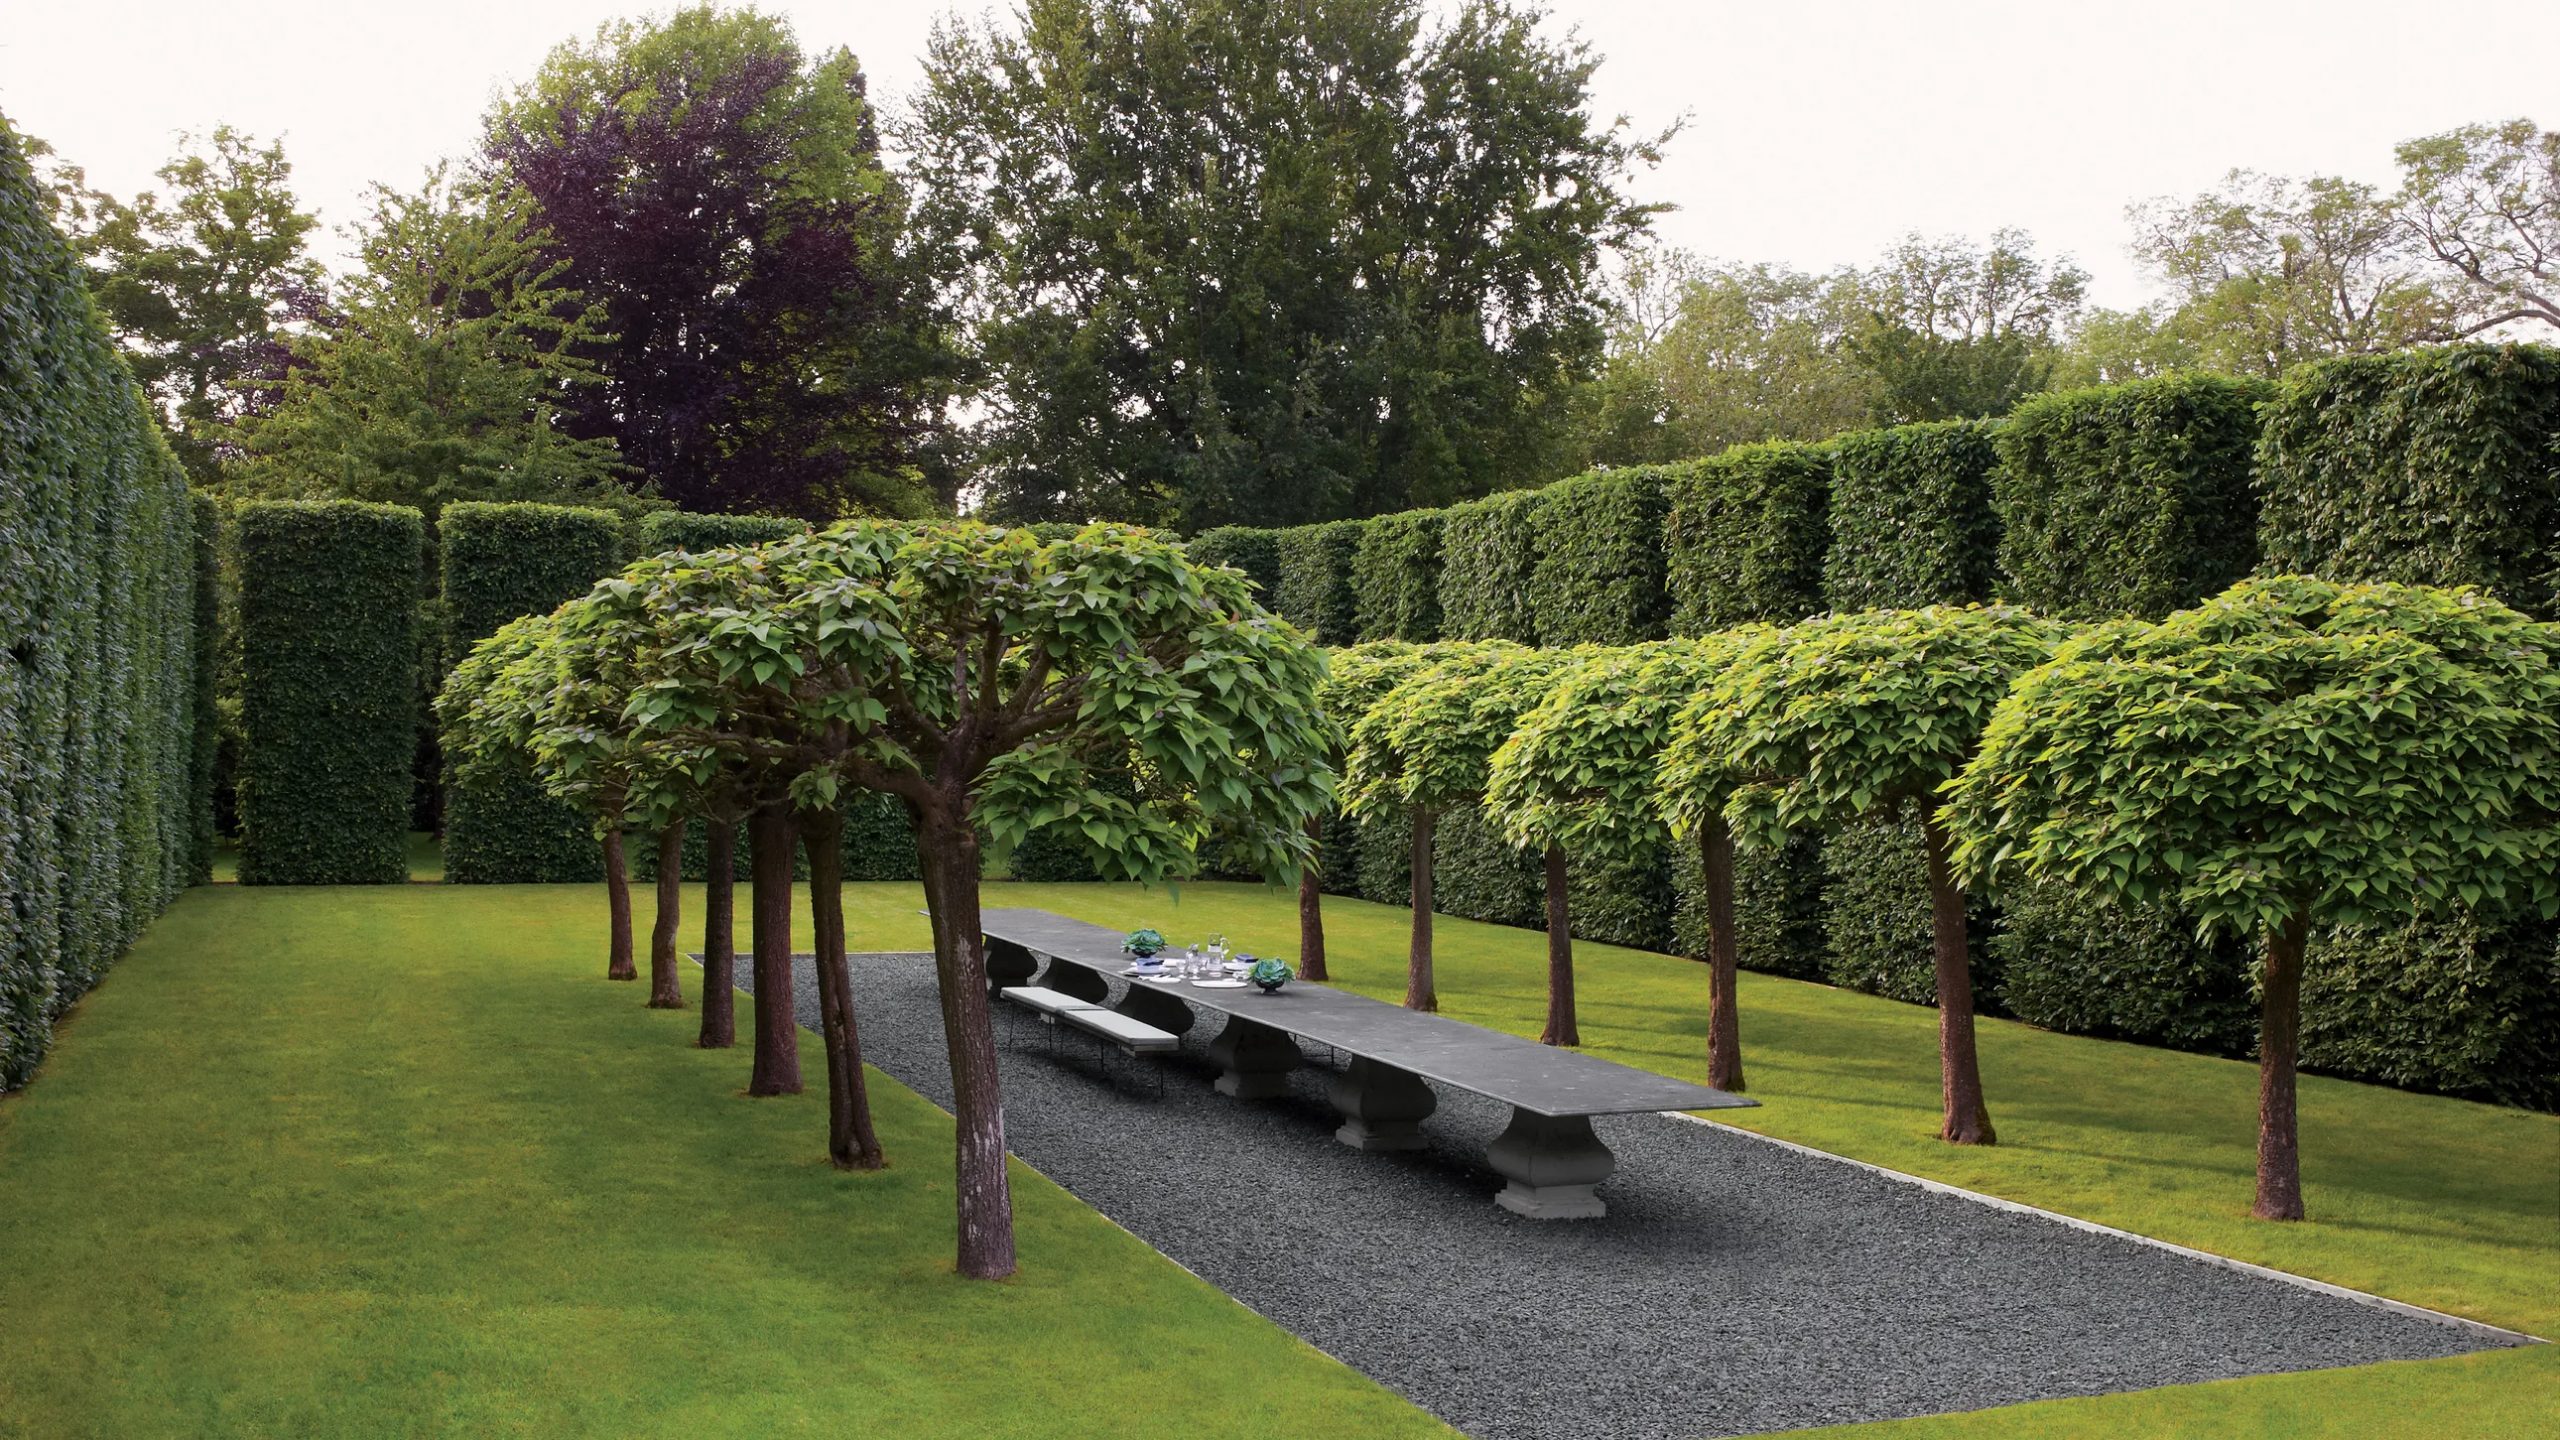 French garden design focusing on symmetry